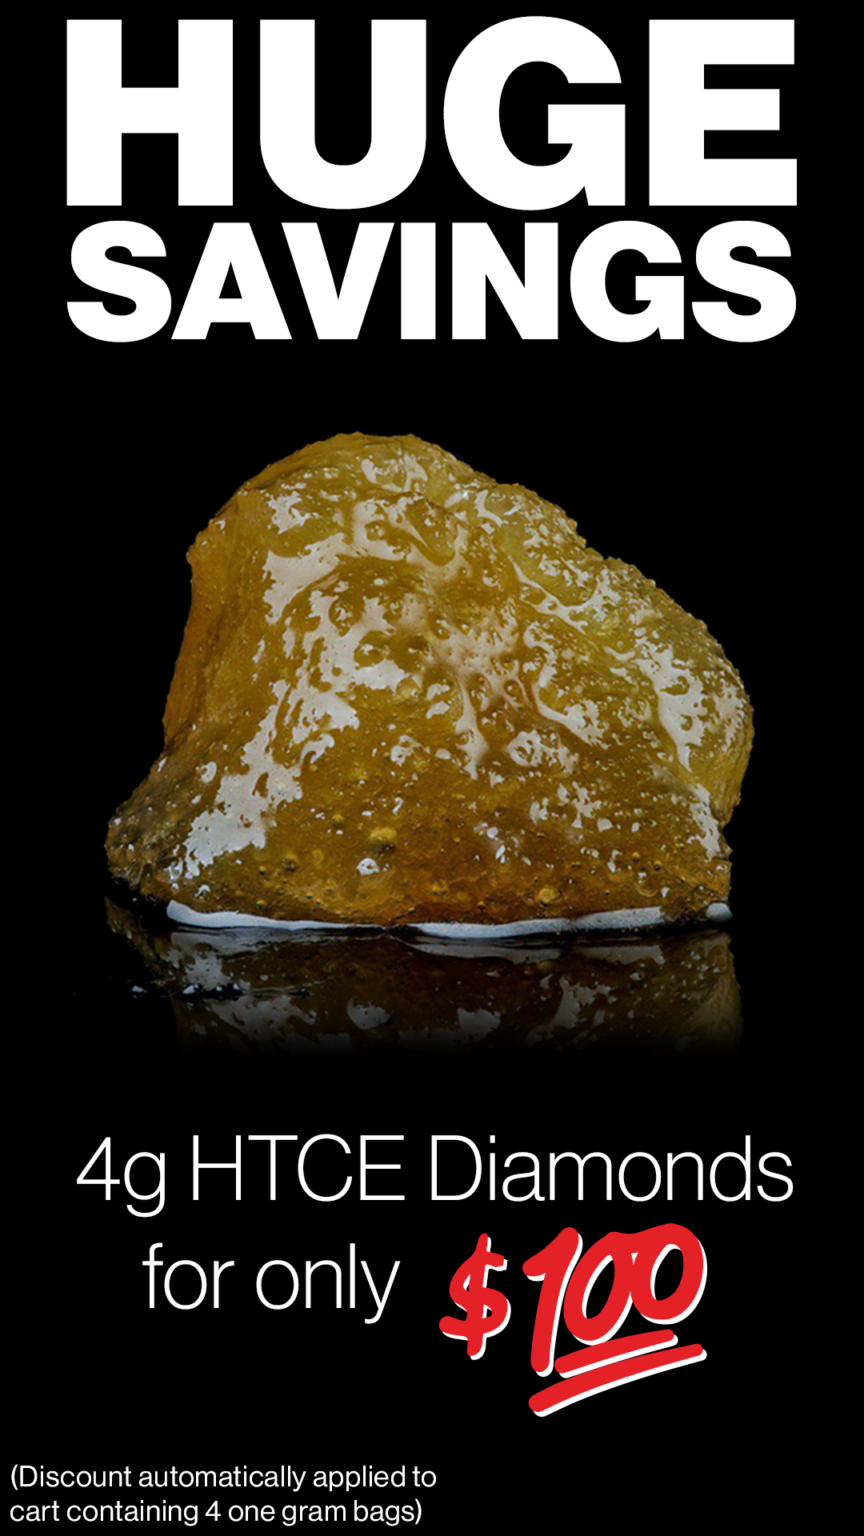 df-htce-sale-plus-diamonds-blackbg-portrait